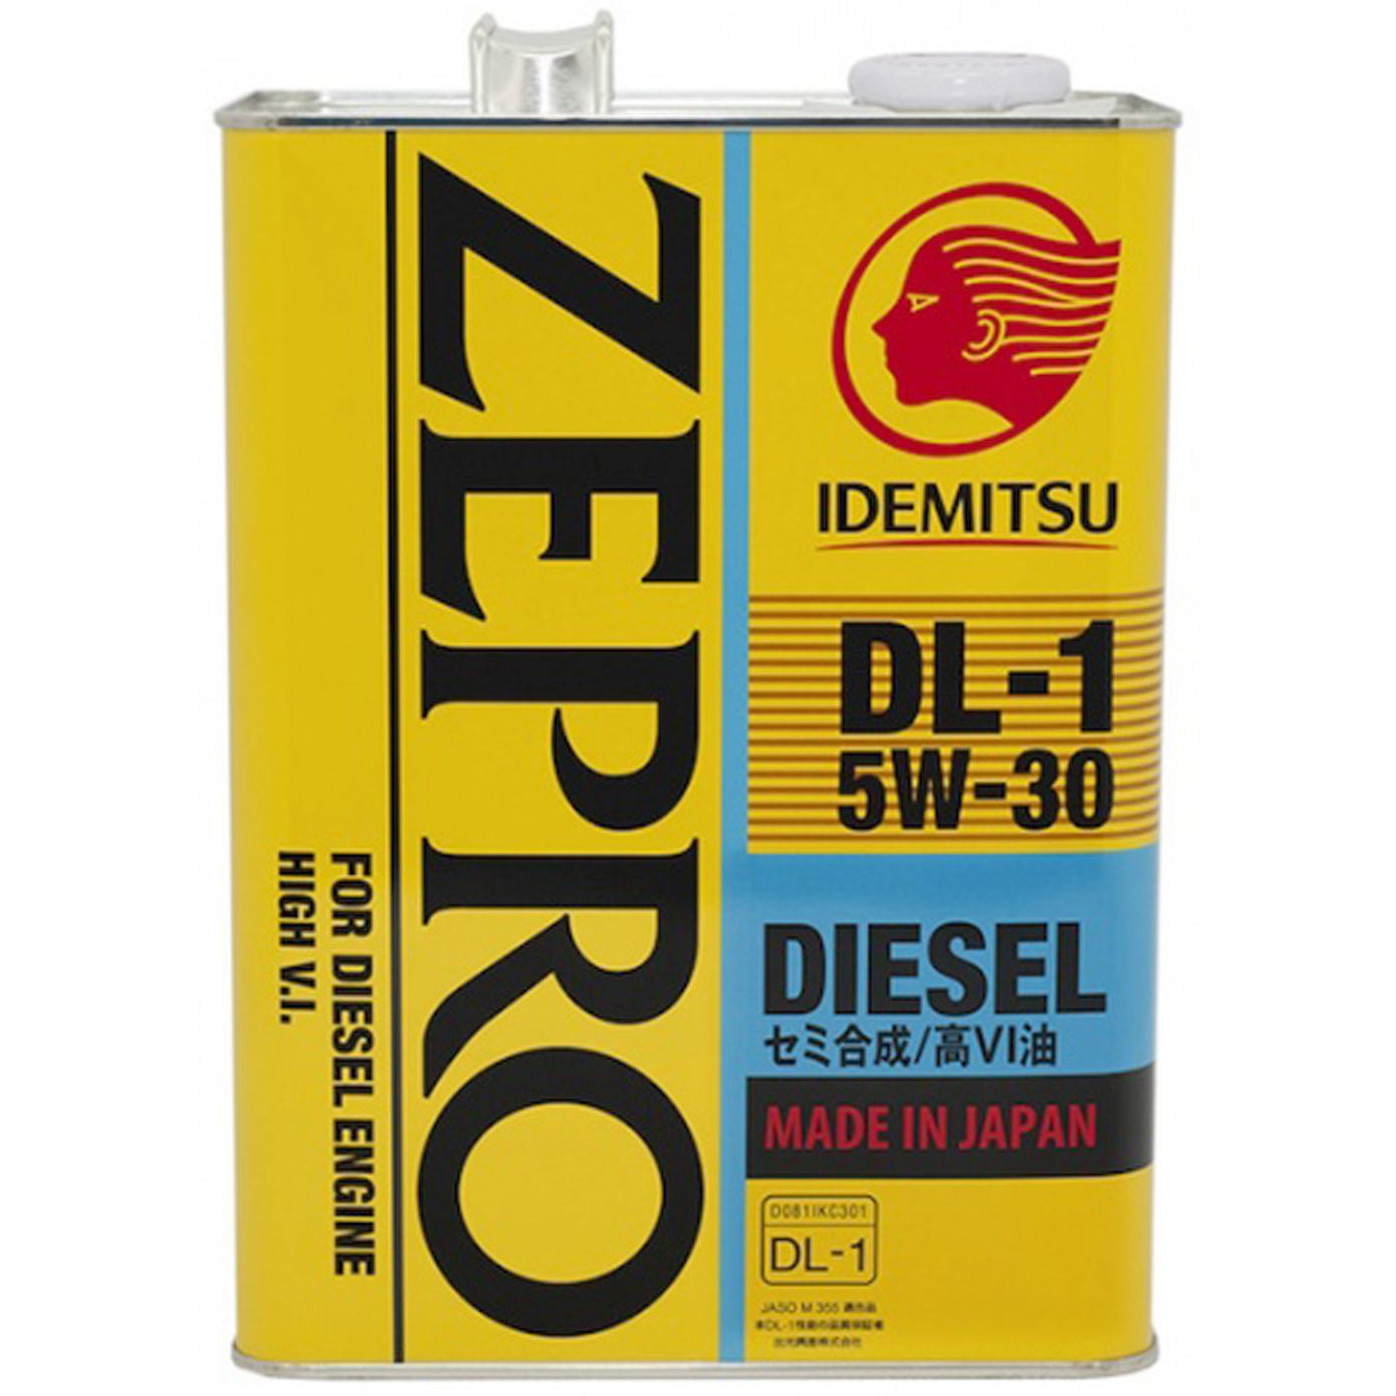 IDEMITSU ZEPRO DIESEL DL-1 5w30 4л.полусинтетическое масло моторное